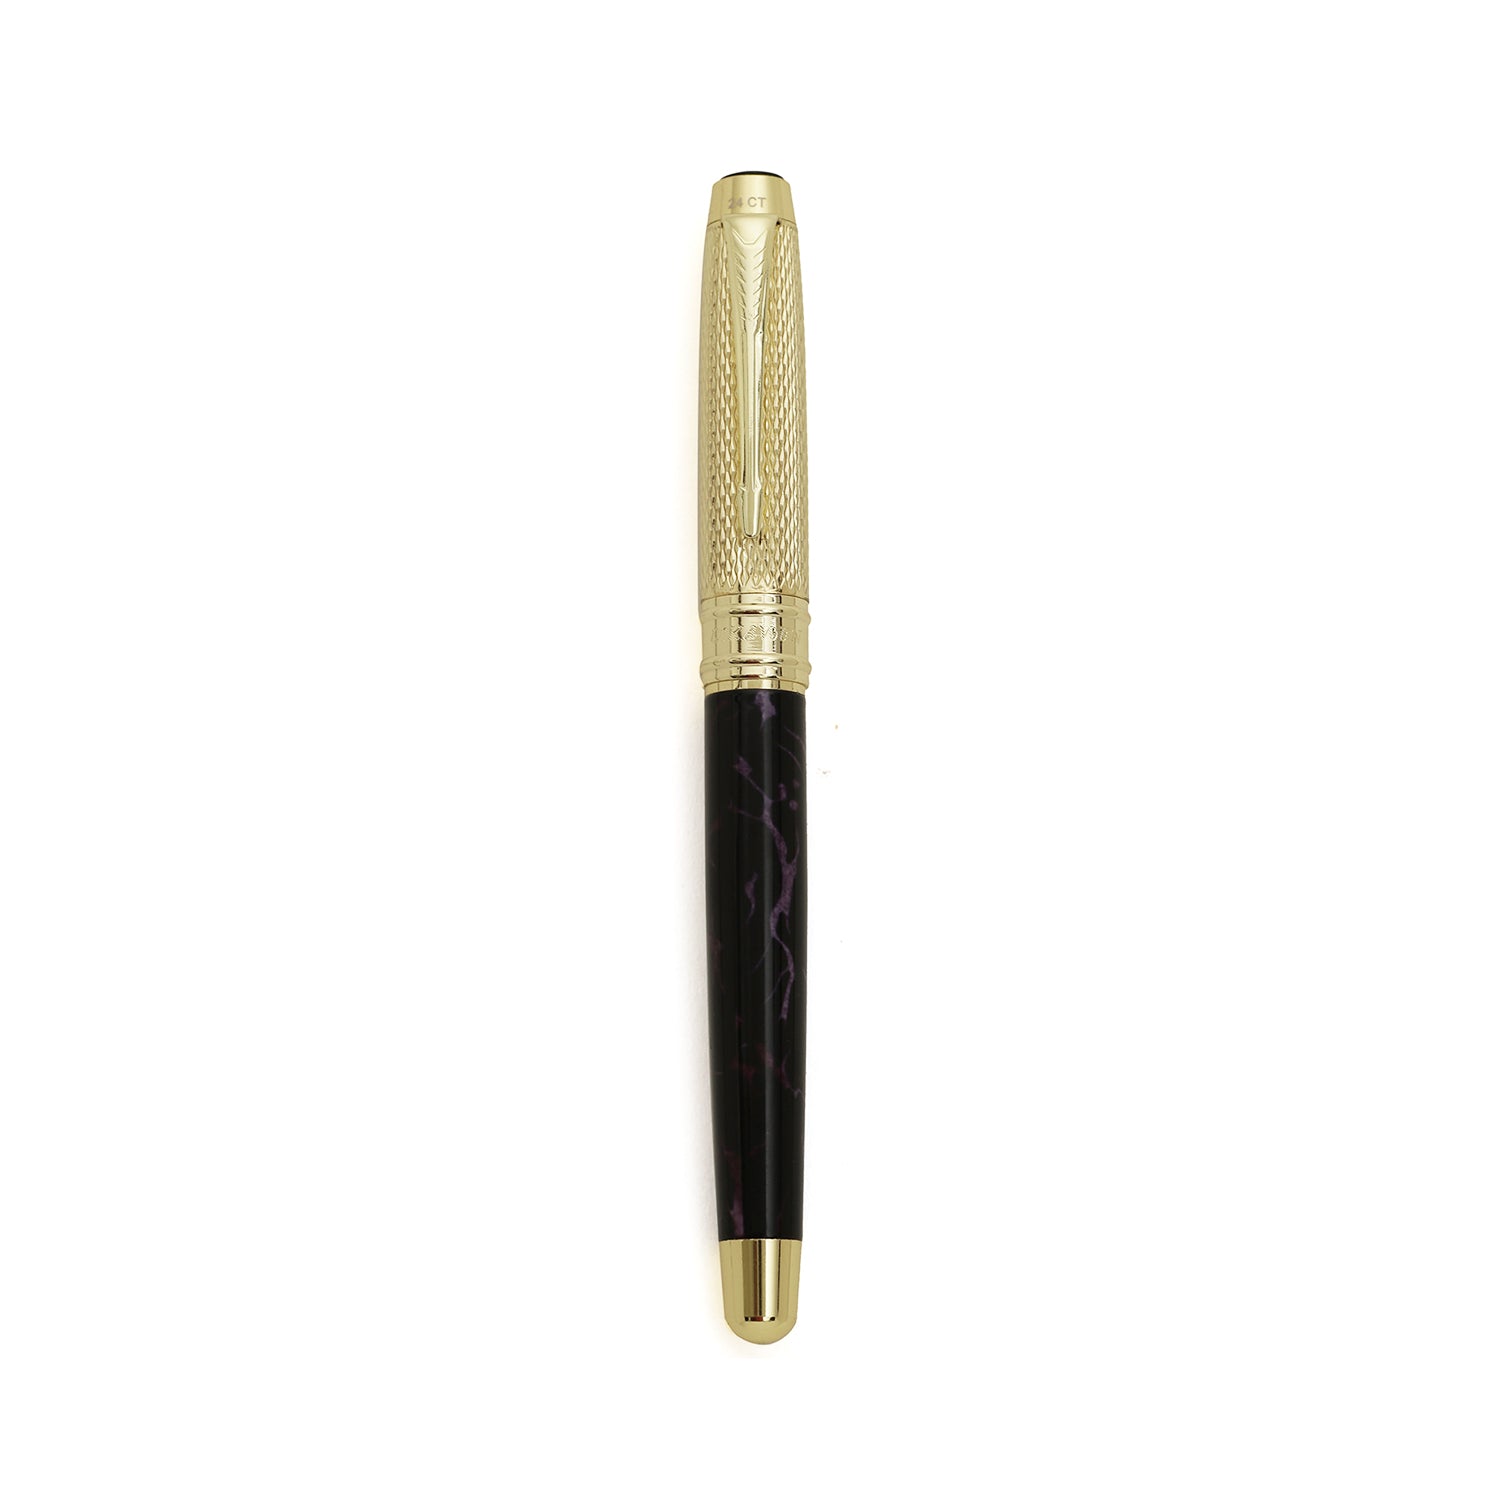 Hayman Dikawen 24 ct Gold Plated Fountain Pen With Gift Box (P-112) - Hayman Pen 